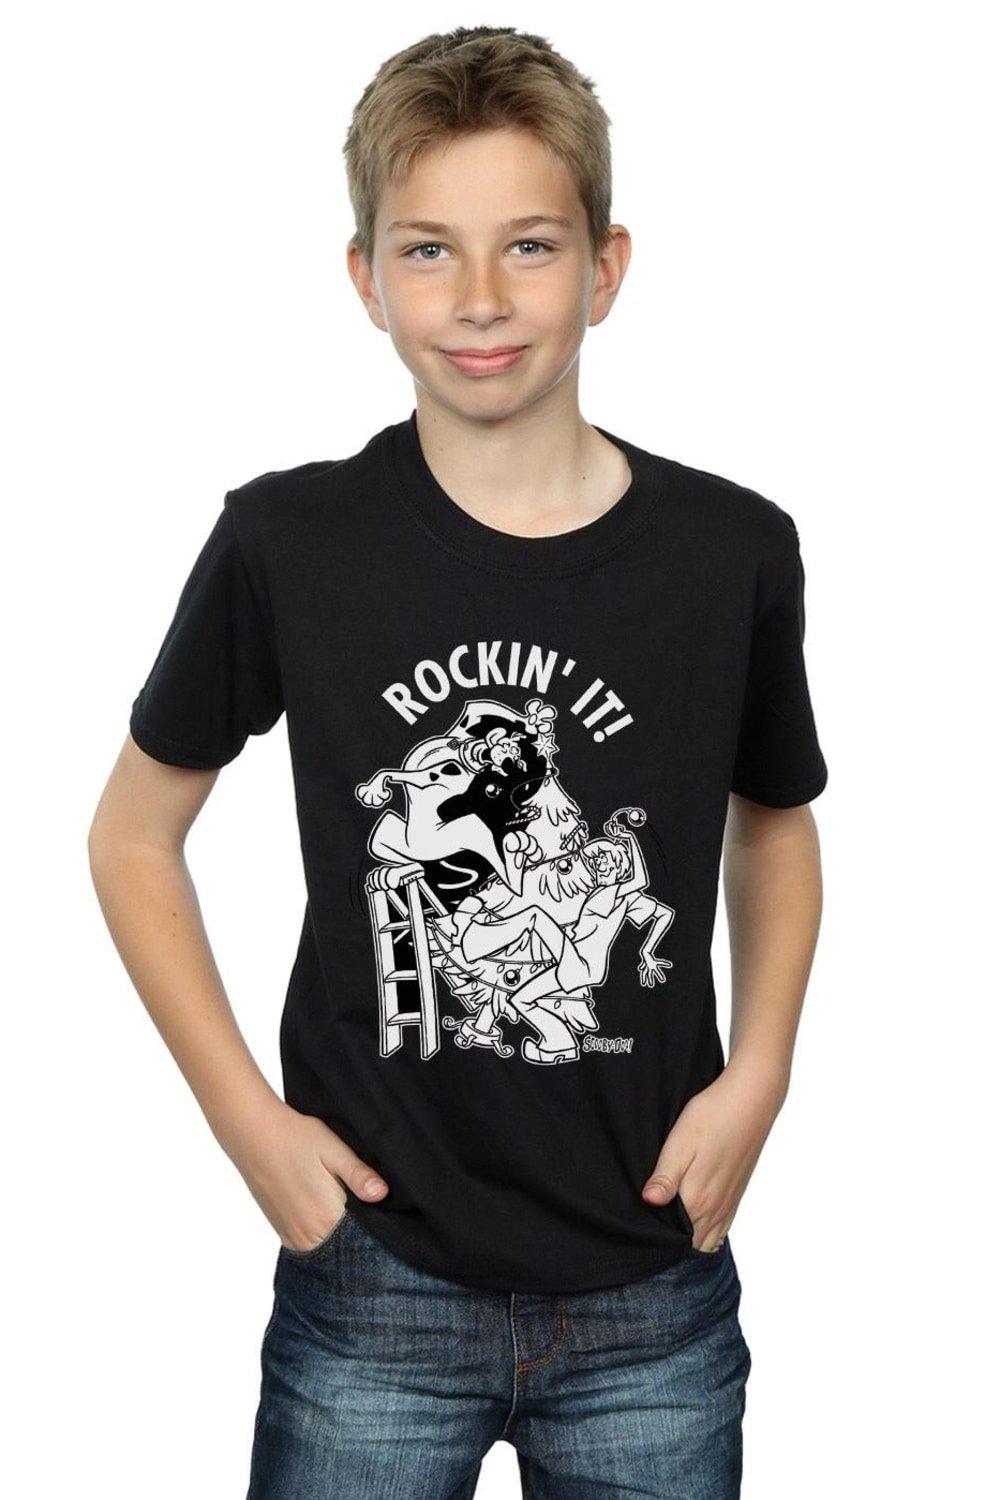 Rockin’ It Christmas T-Shirt